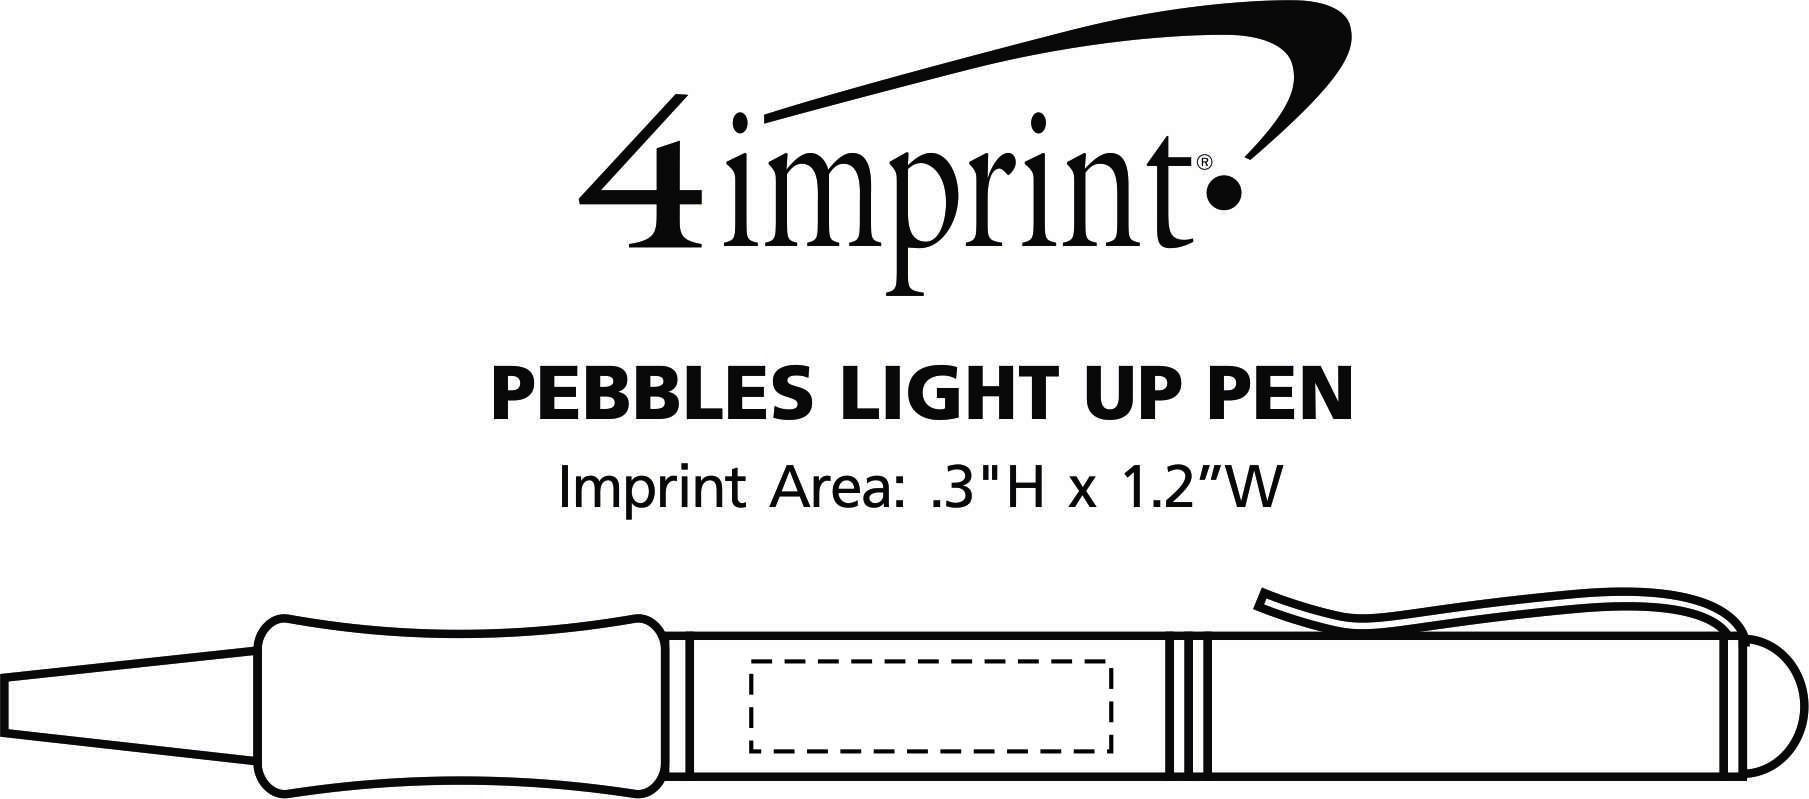 Imprint Area of Pebbles Light-Up Pen